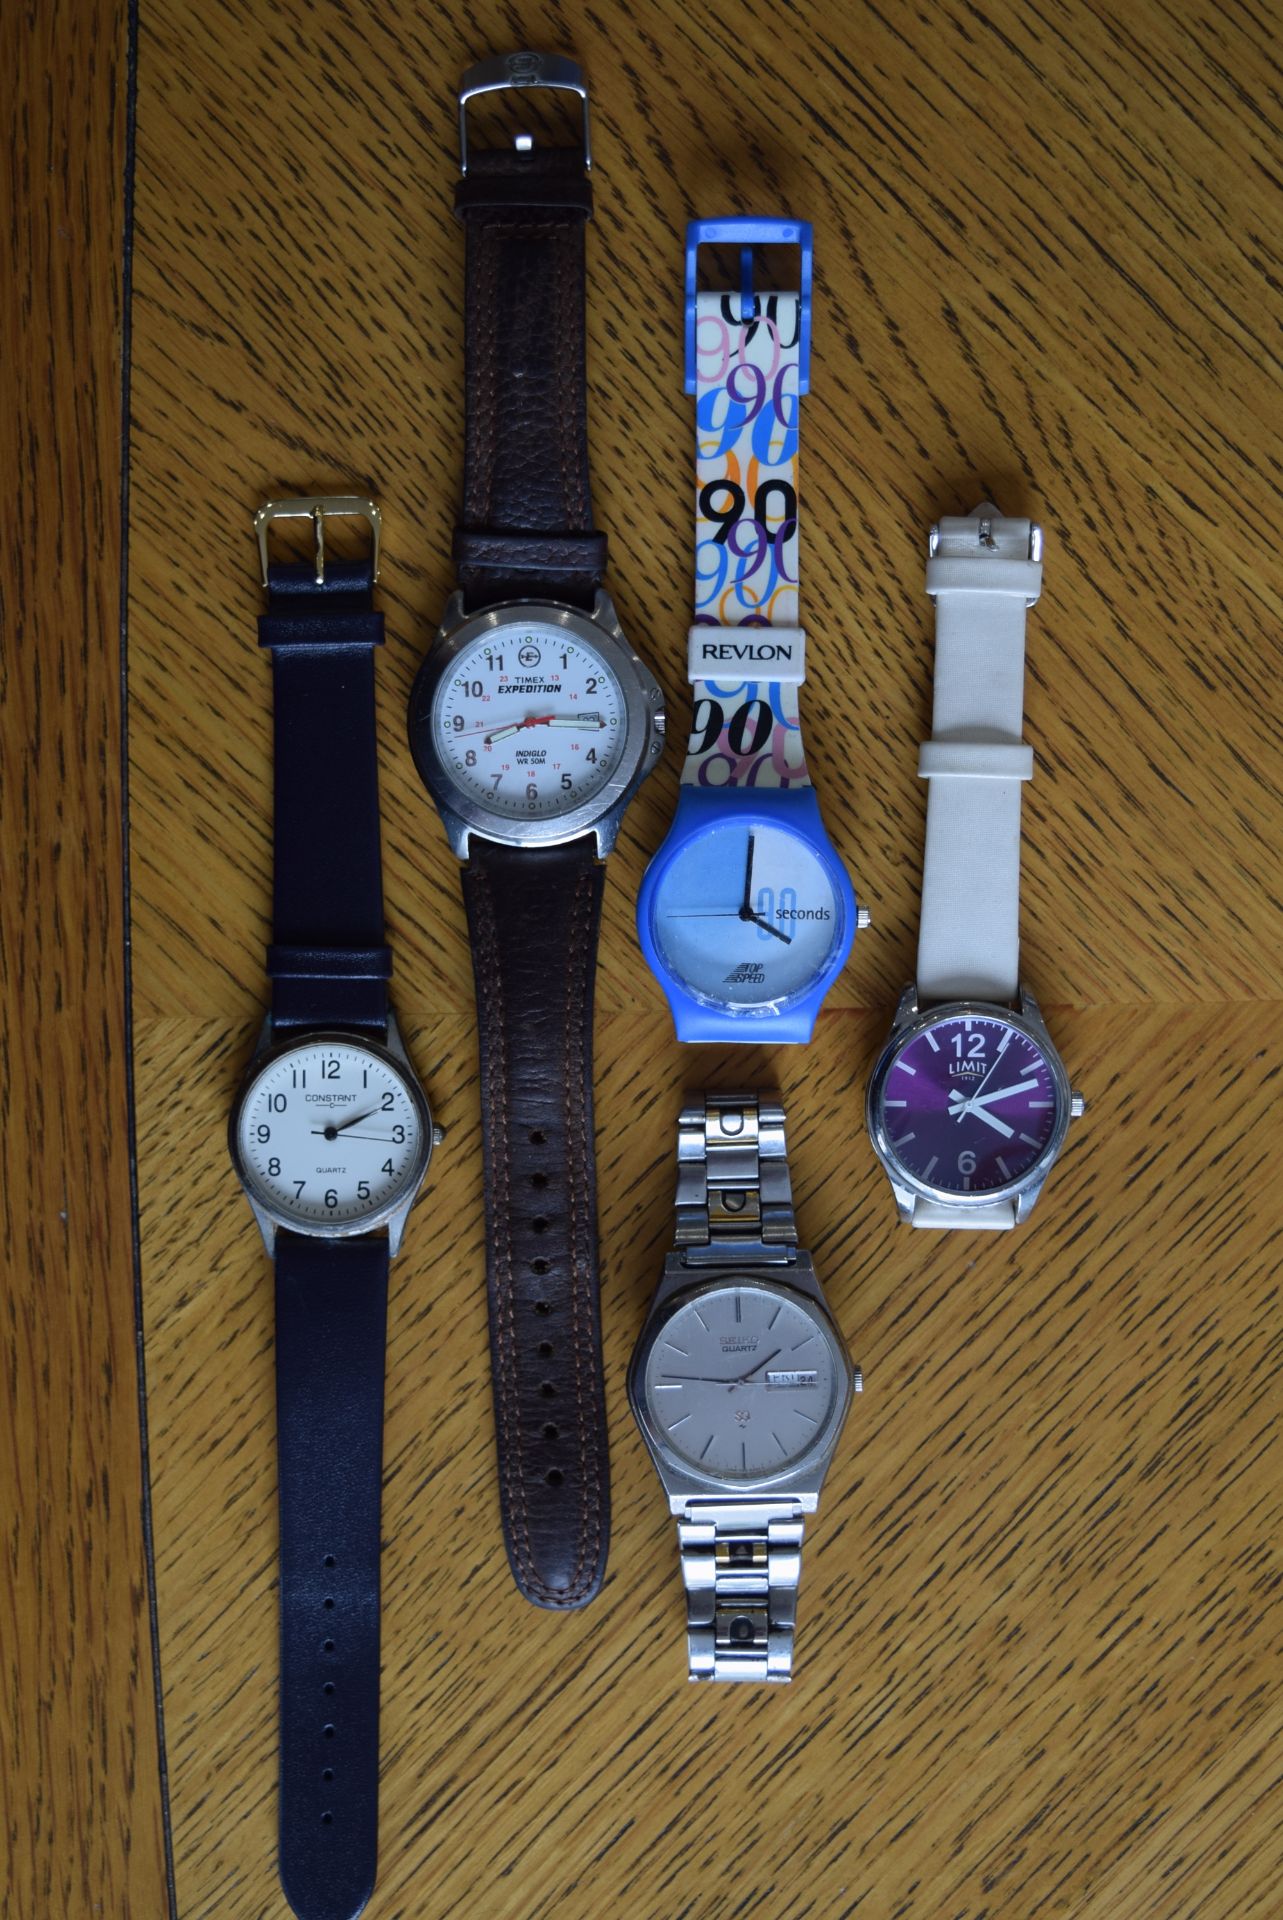 Joblot of Watches - Seiko/ Timex etc